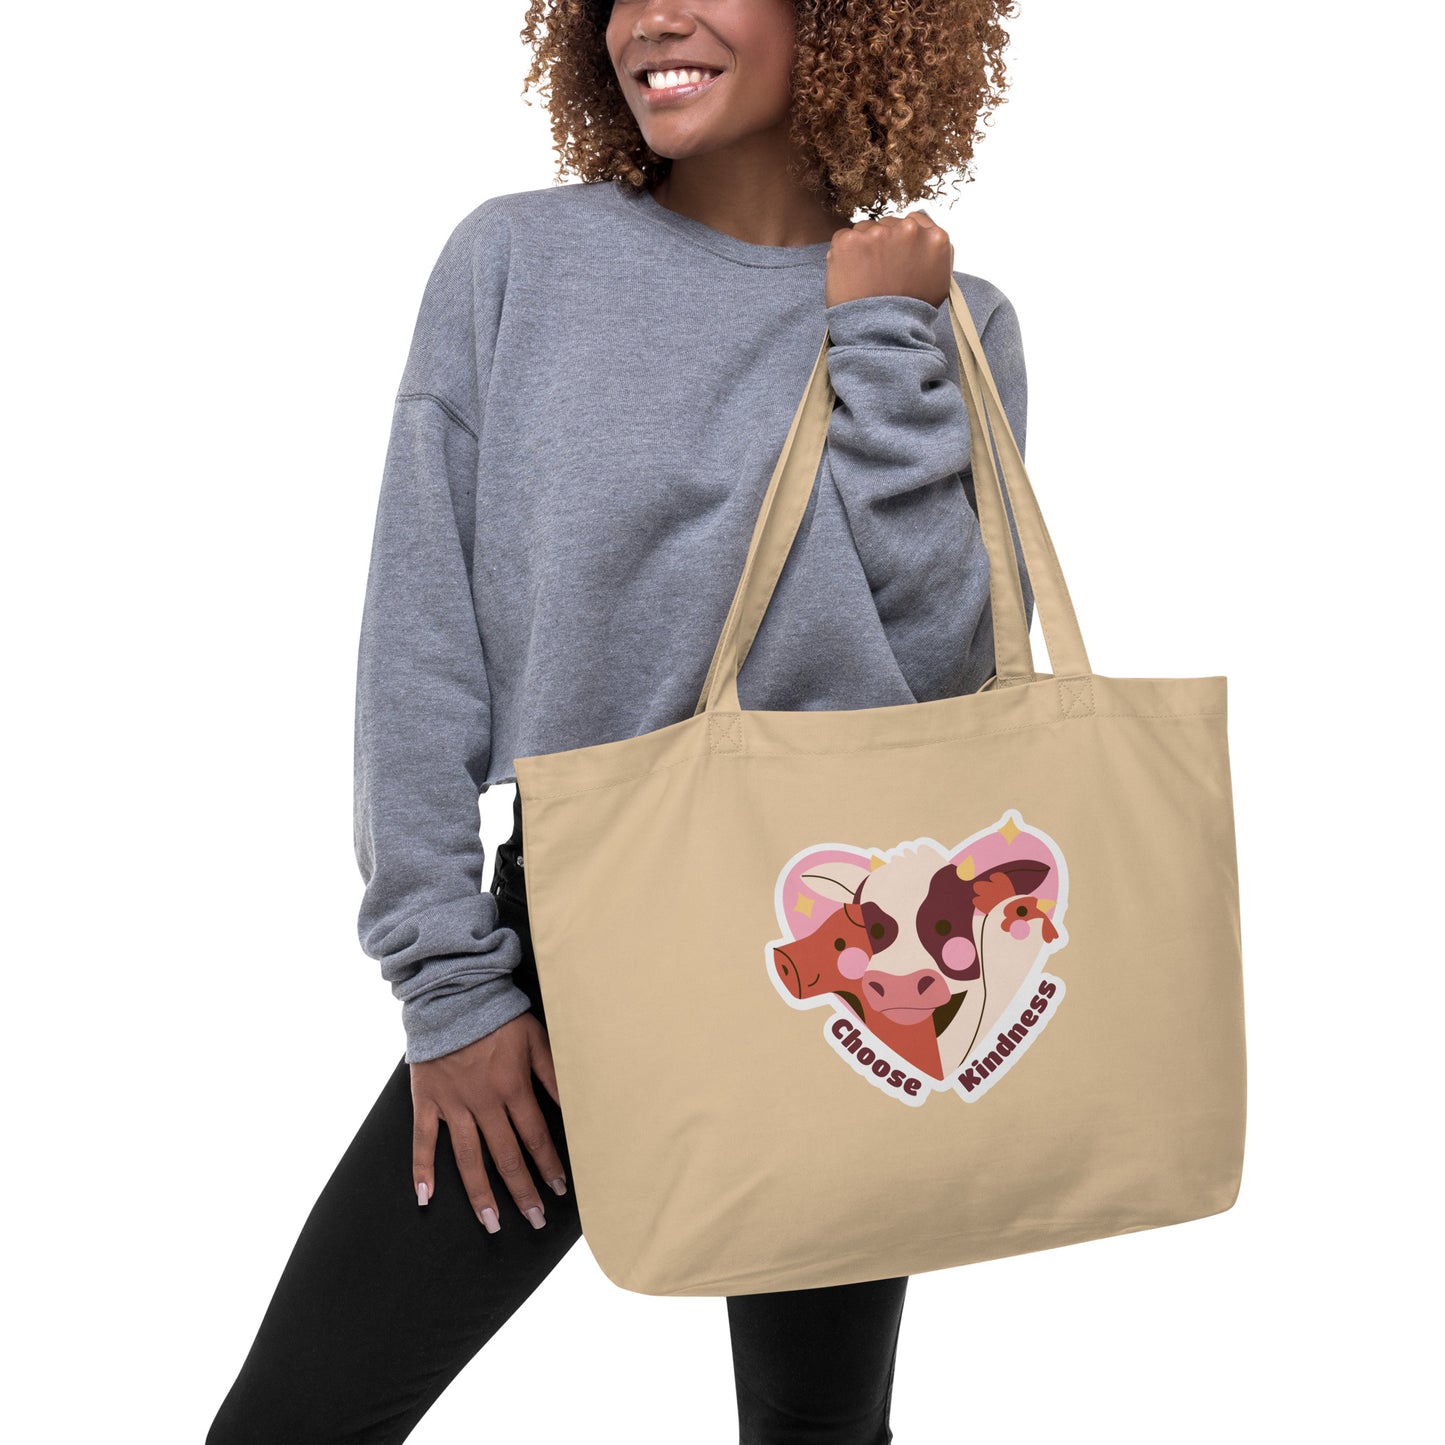 Choose Kindness - Large organic tote bag